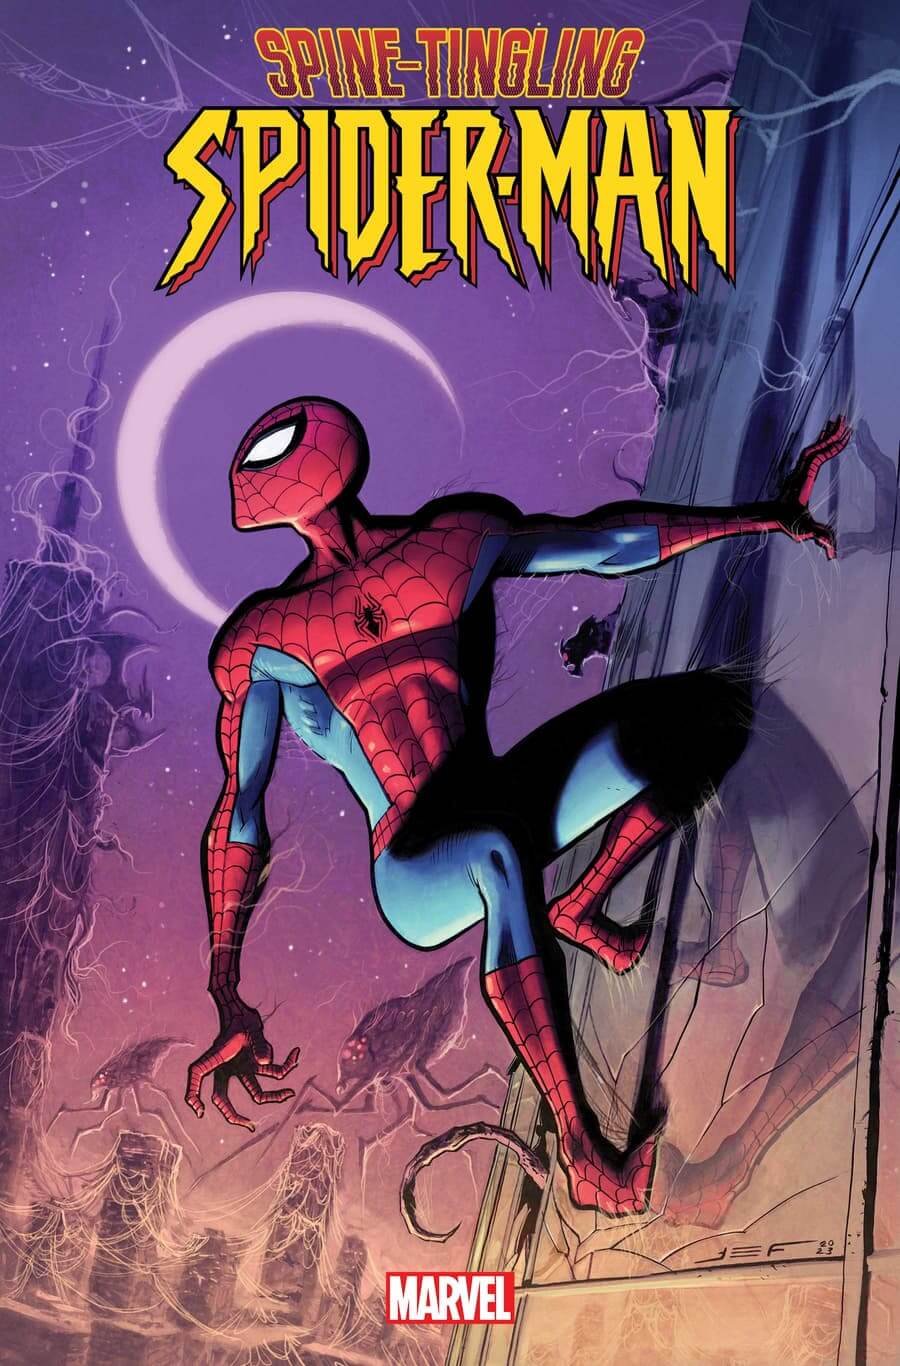 Couverture de Spine-Tingling Spider-Man 1 par Juan Ferreyra